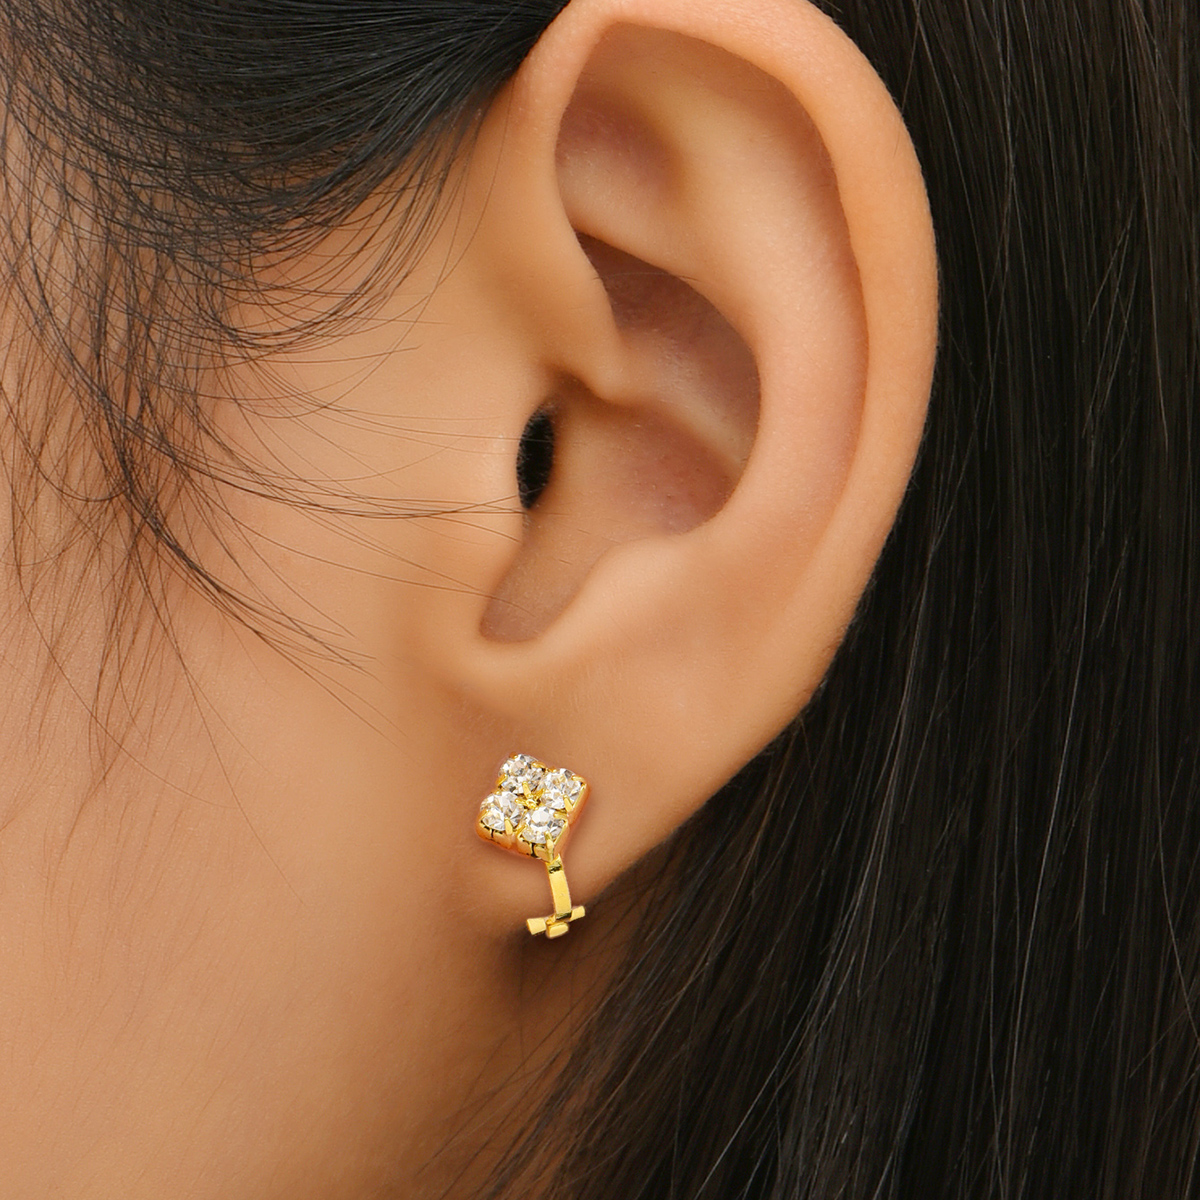 20pc Crystal Golden Tone Square Clip On Non Pierced Earrings for Women I GCJ500 - Gold